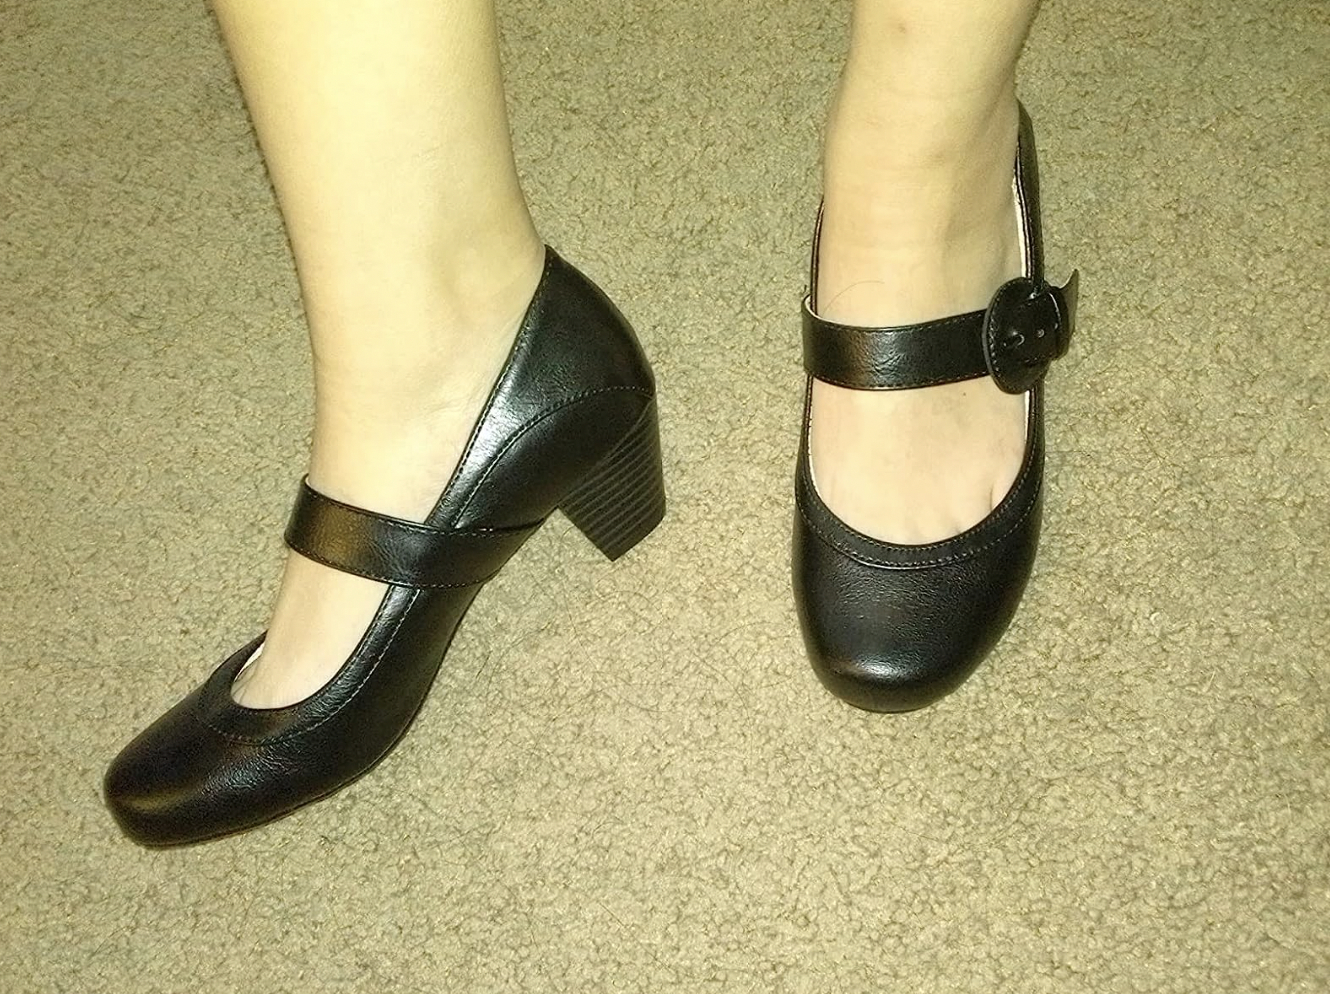 The black heels